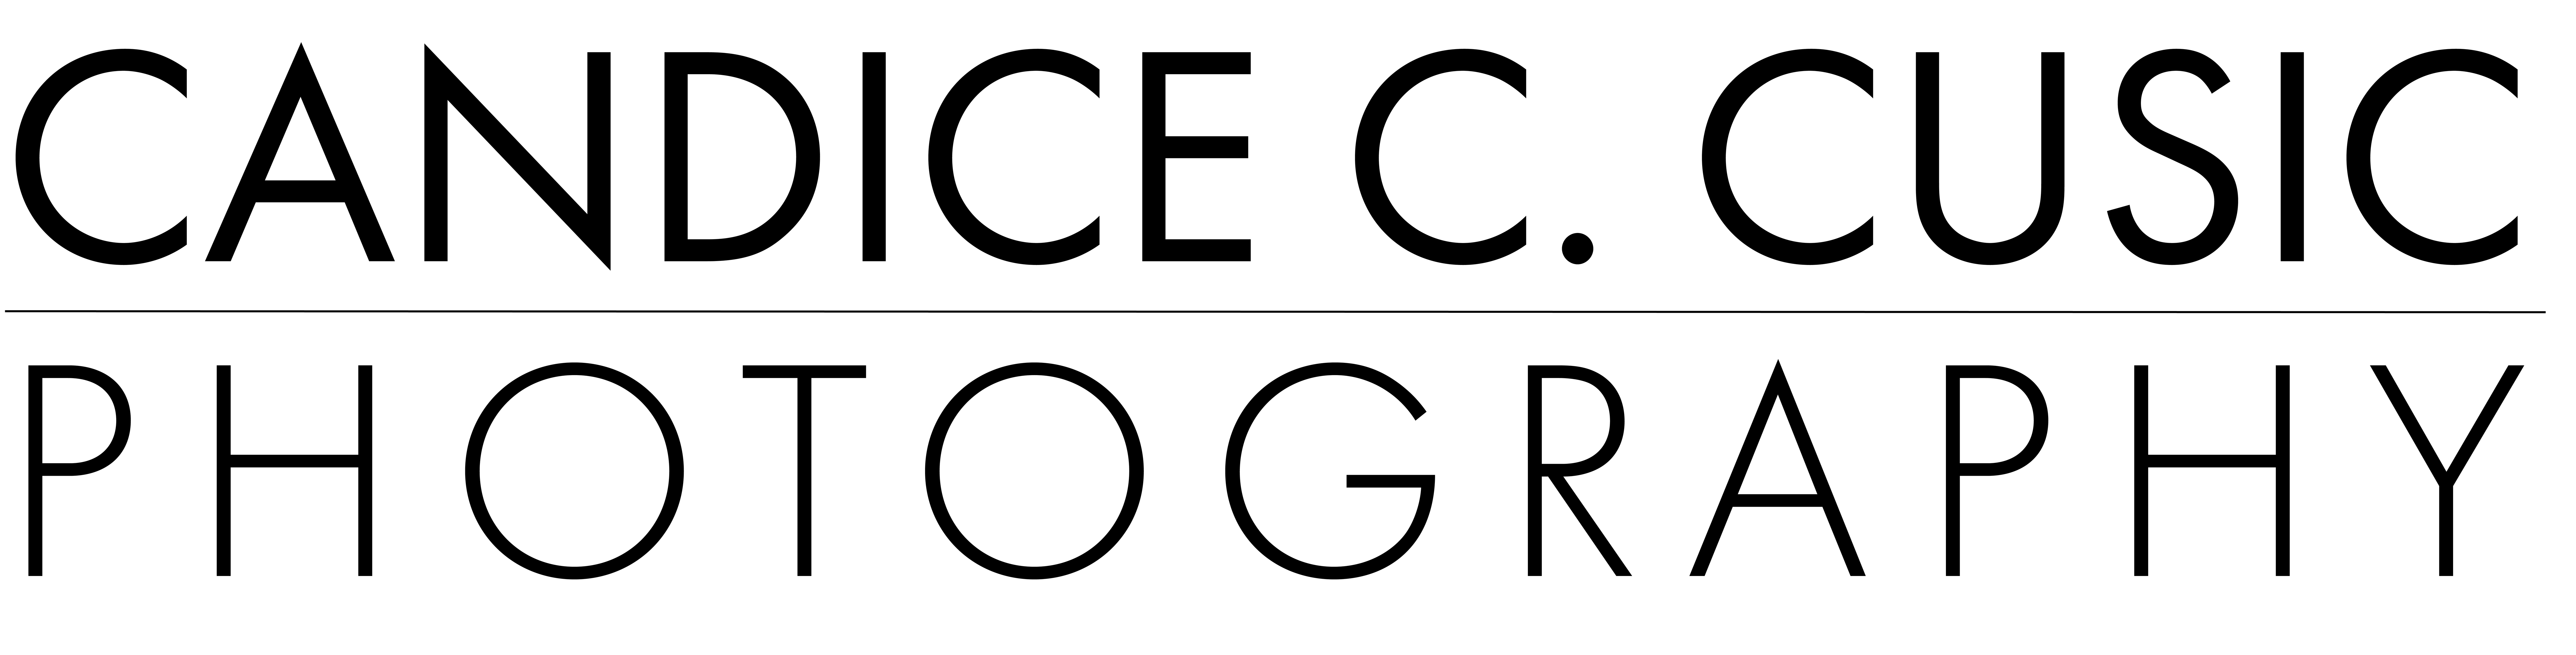 Canndice Cusic logo